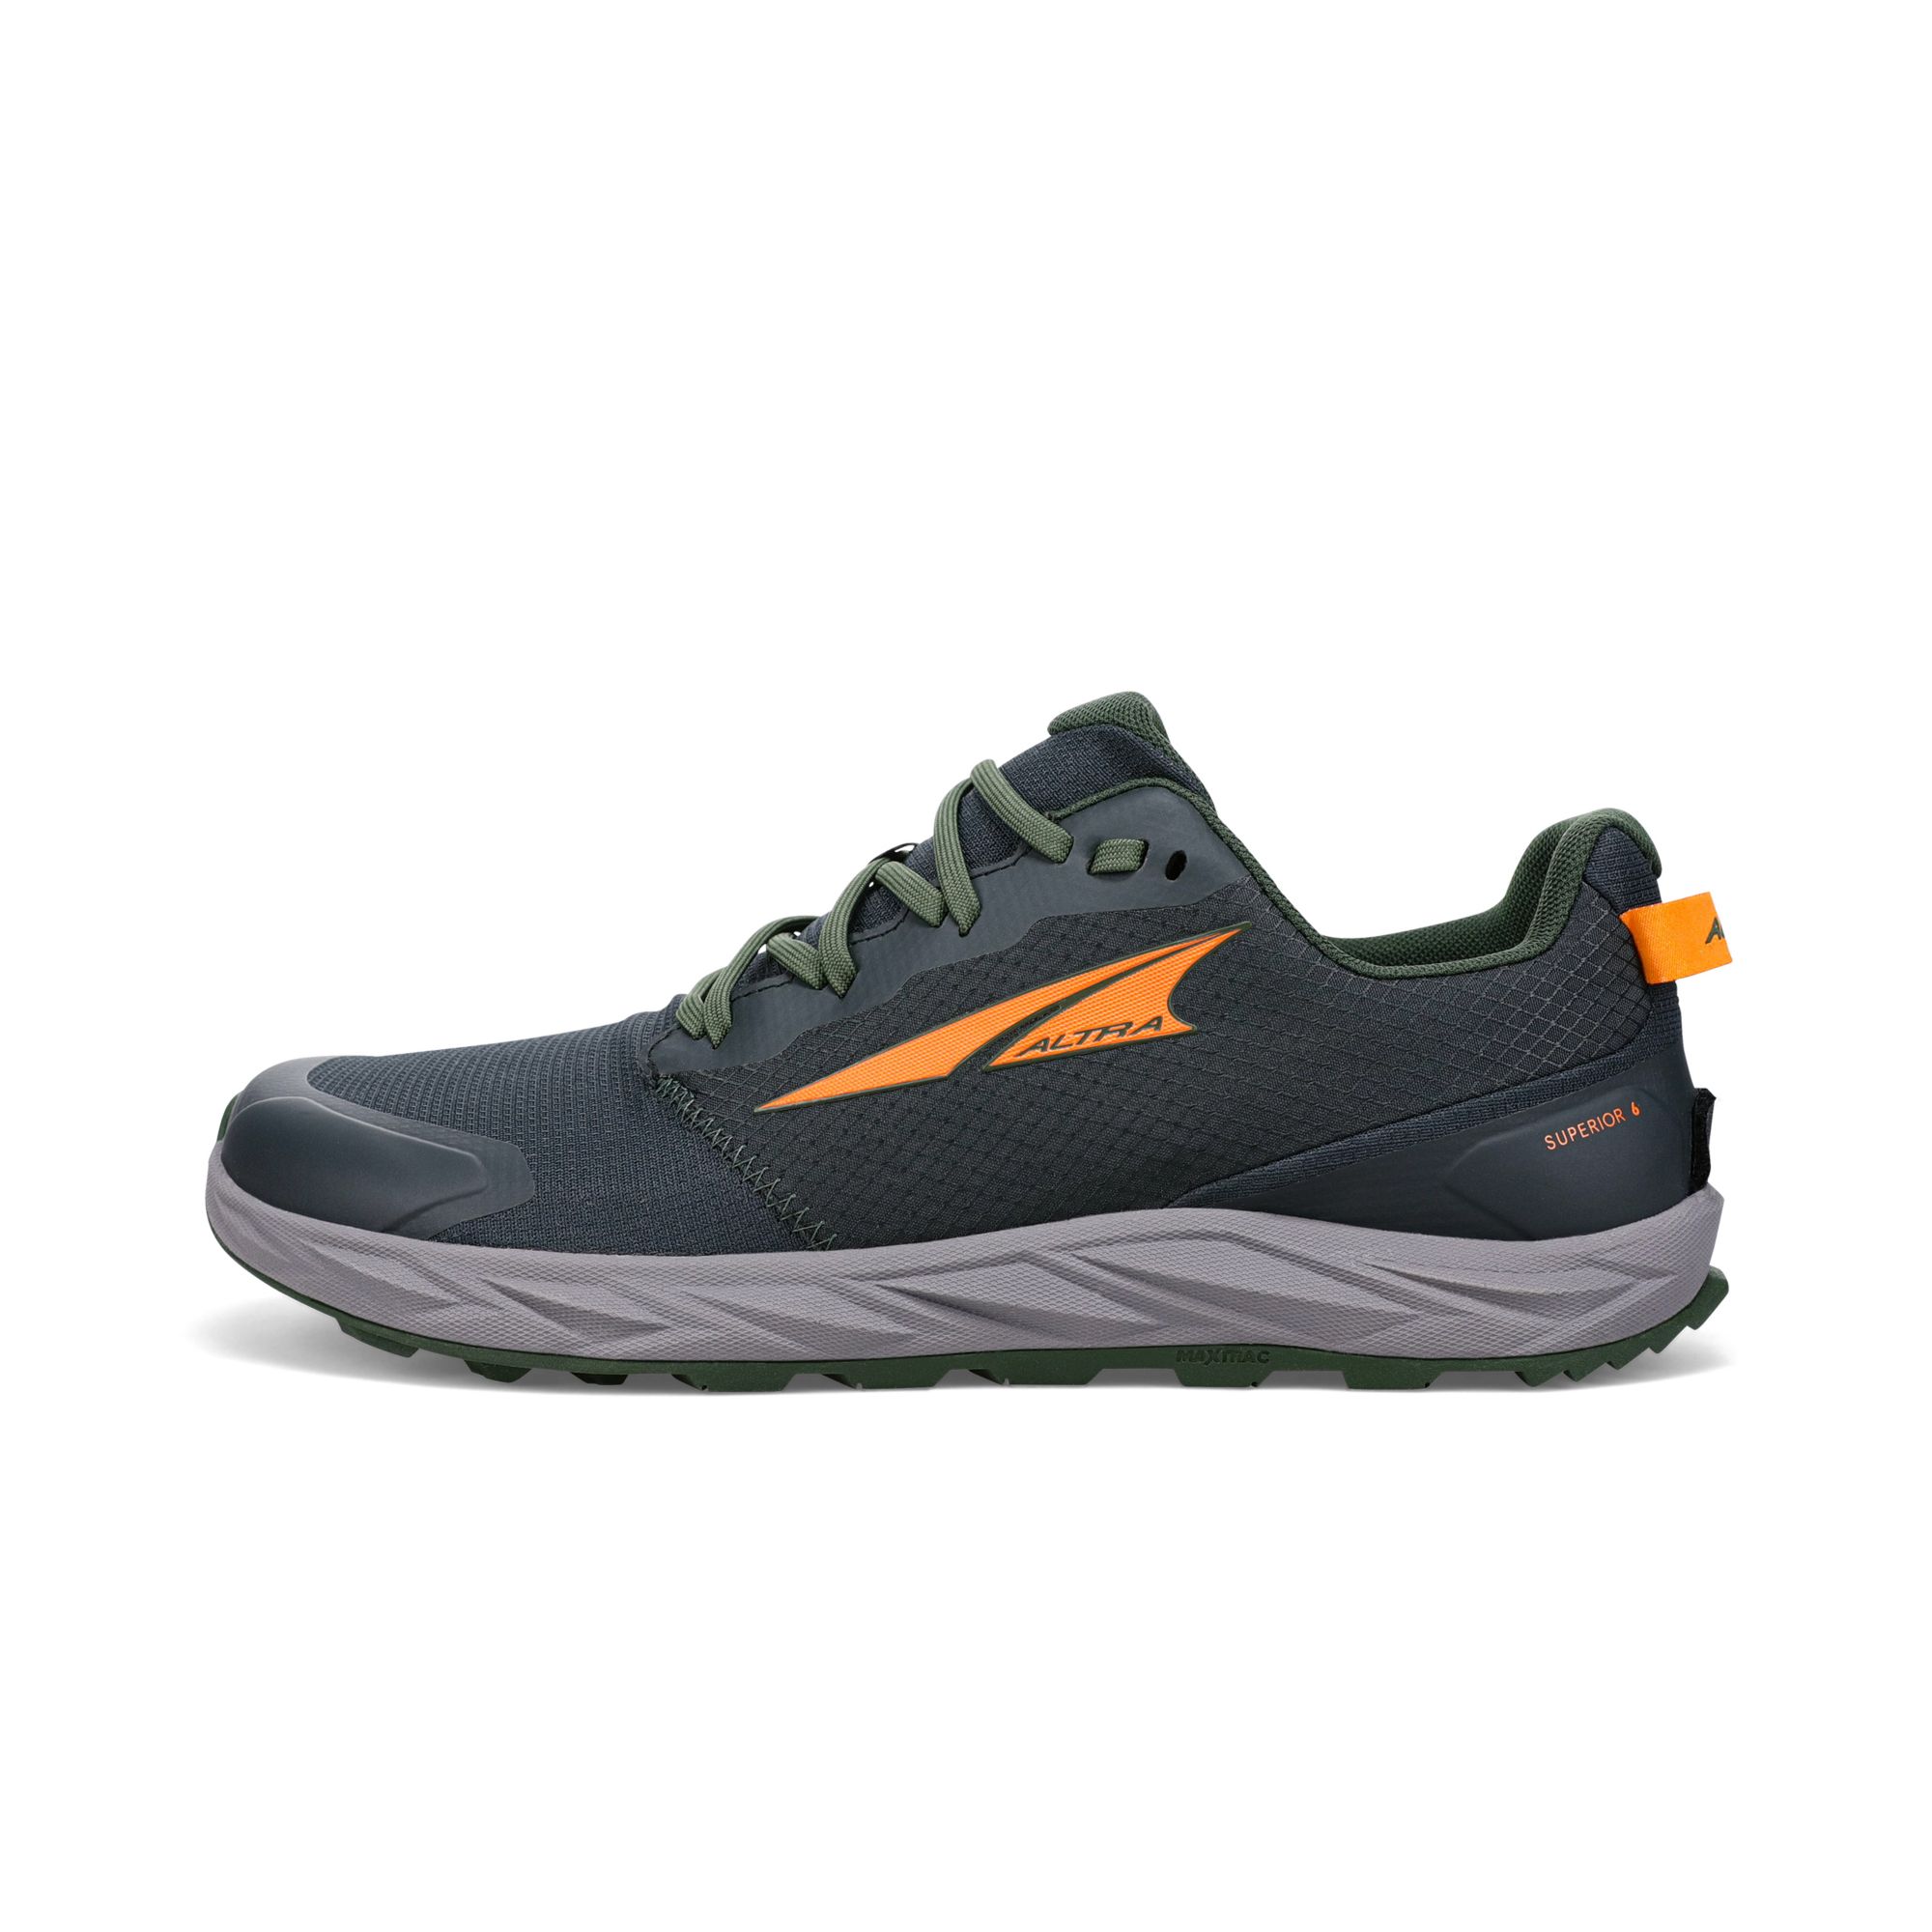 Men's Superior 6 Trail Running Shoes | Altra Running